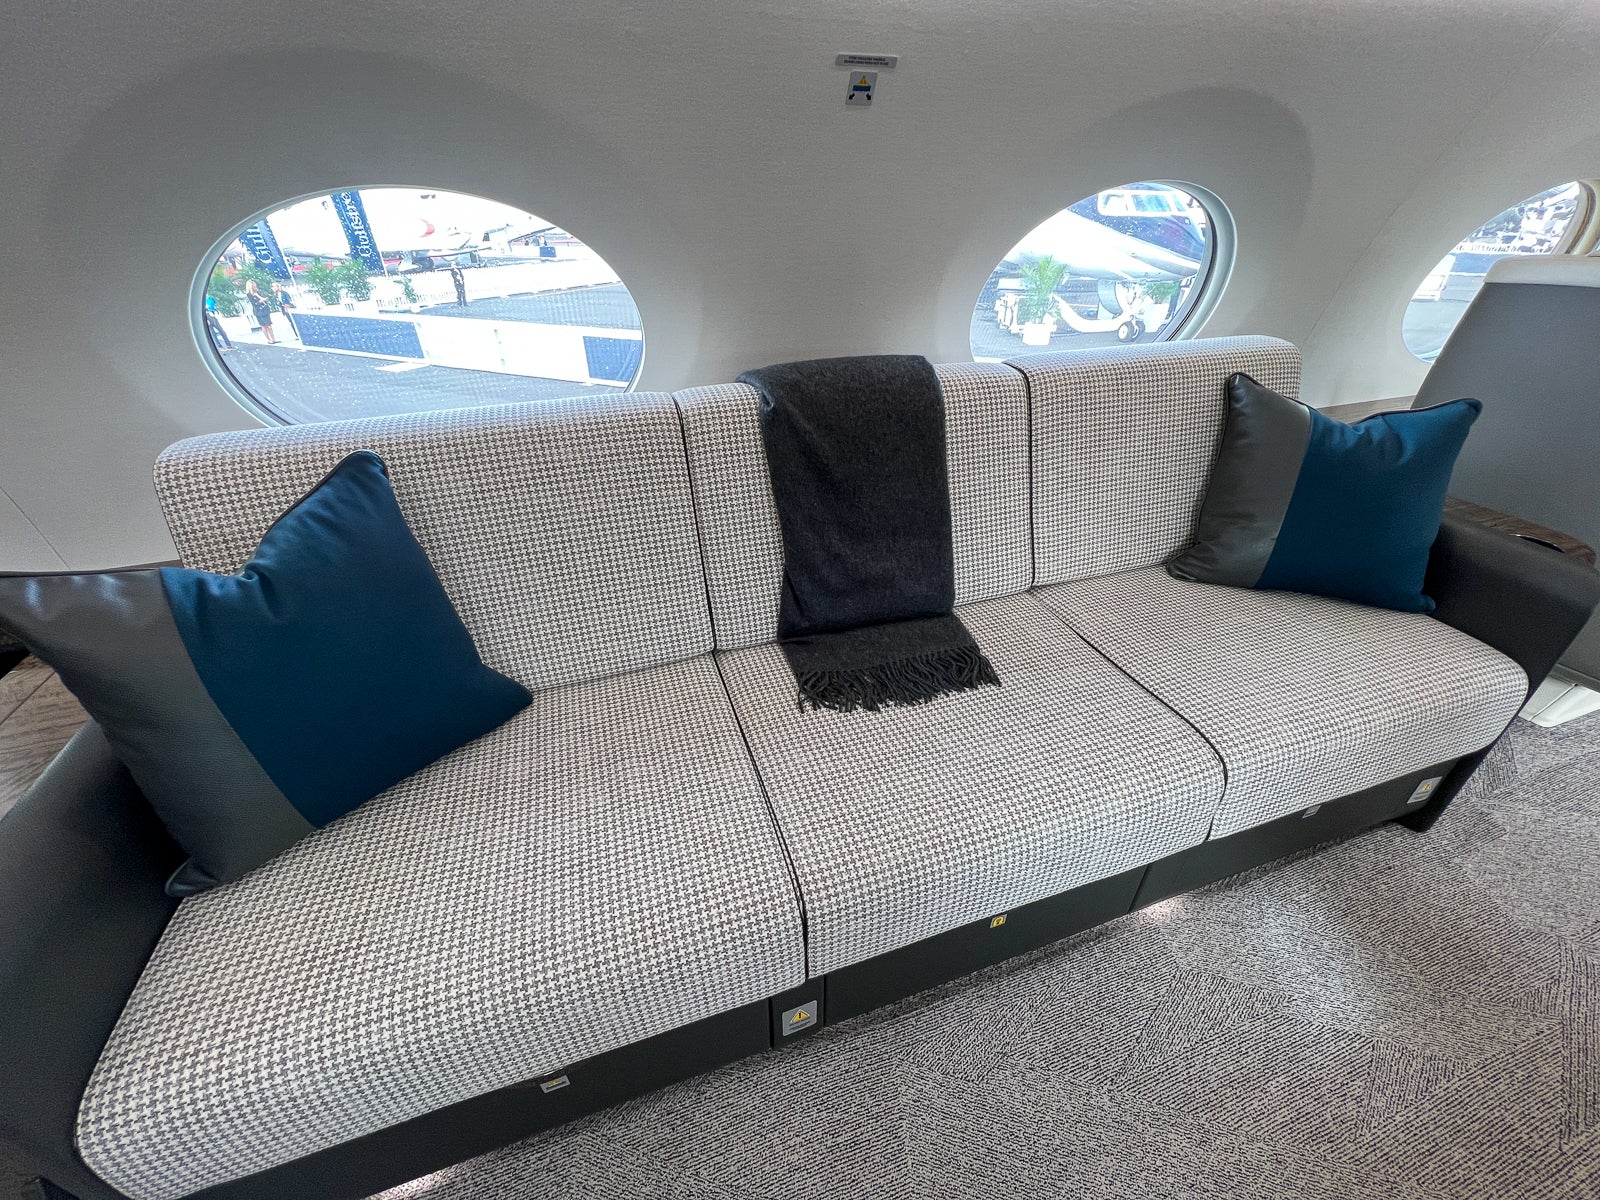 40 winks on a Gulfstream - Louis Vuitton is selling $750 sleep